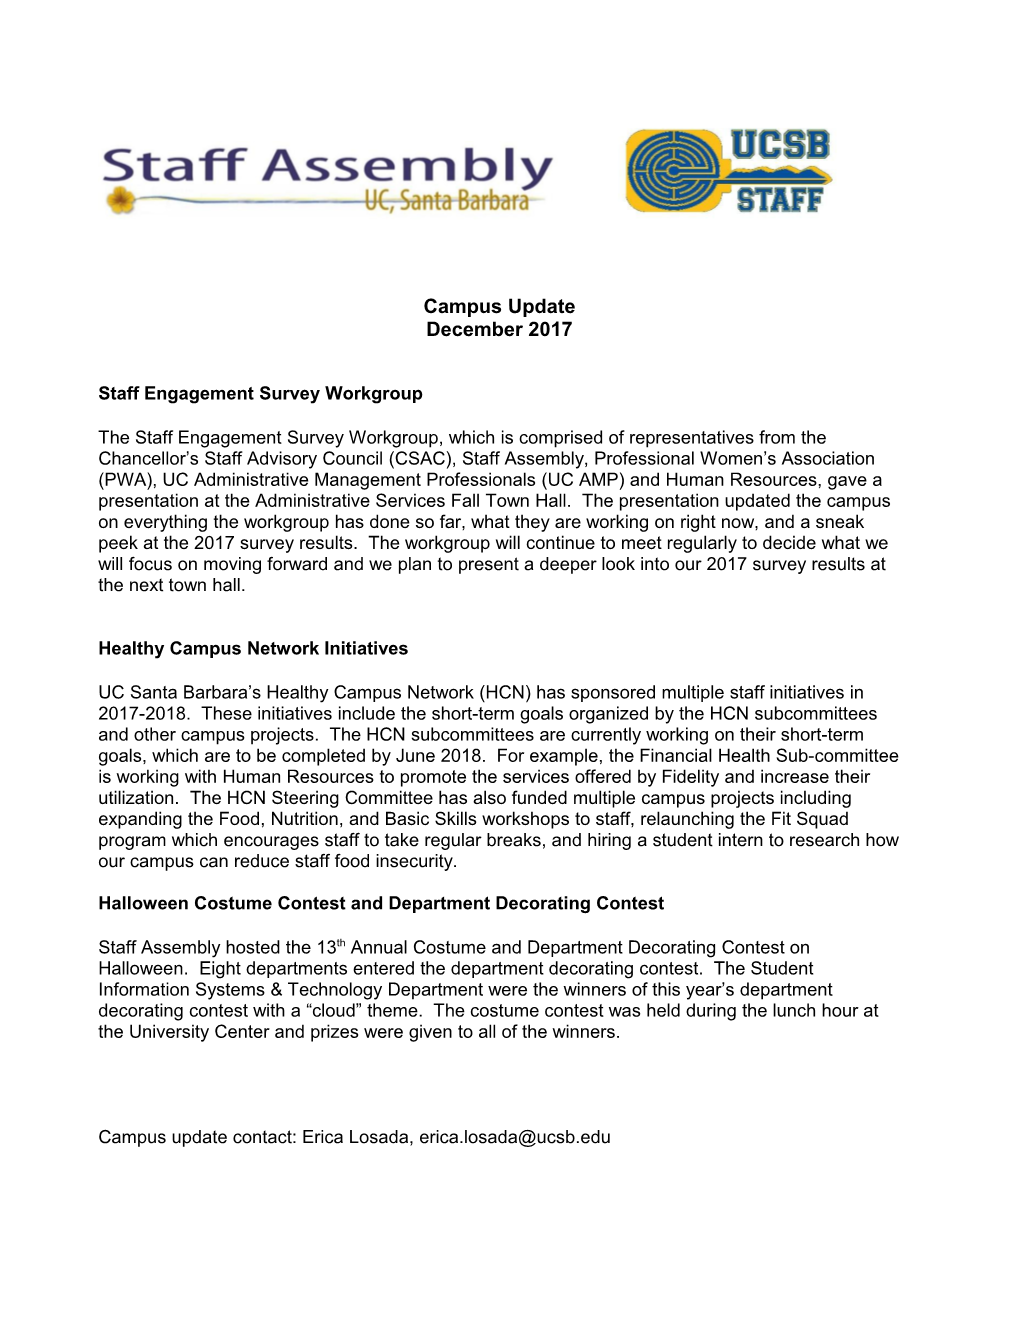 Staff Engagement Survey Workgroup